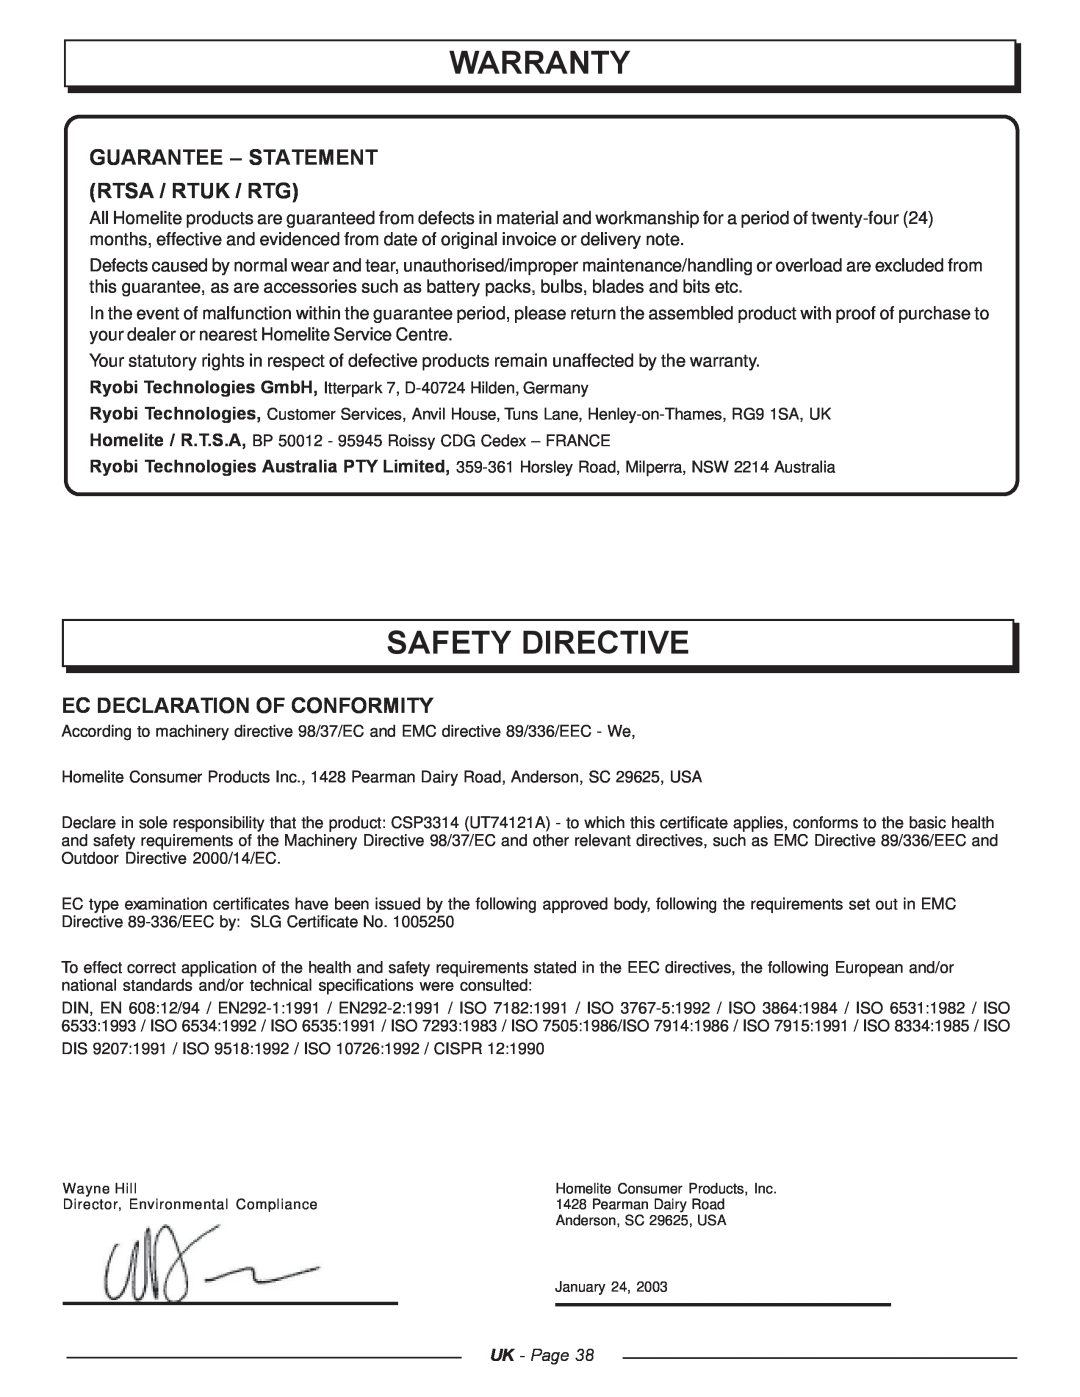 Homelite UT74121A manual Warranty, Safety Directive, Guarantee - Statement Rtsa / Rtuk / Rtg, Ec Declaration Of Conformity 